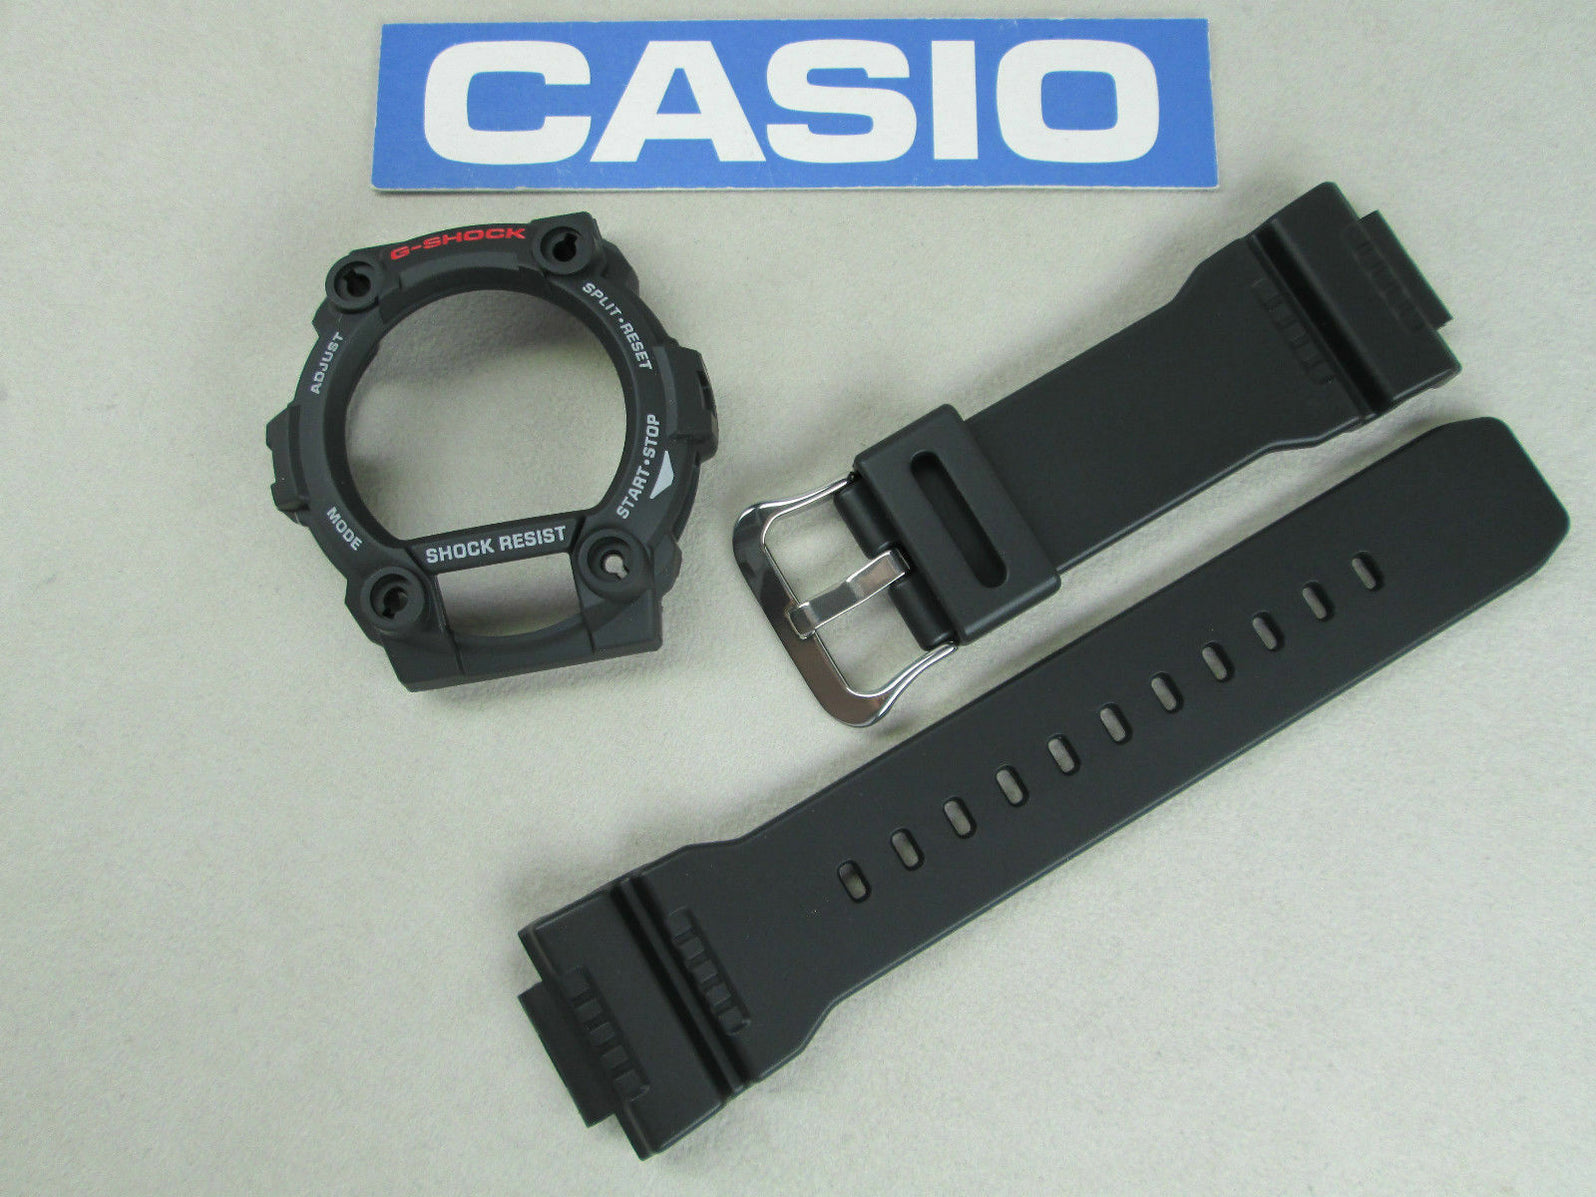 CASIO G-Shock GW-7900 Original G-Shock Black BAND & BEZEL Combo GW-790